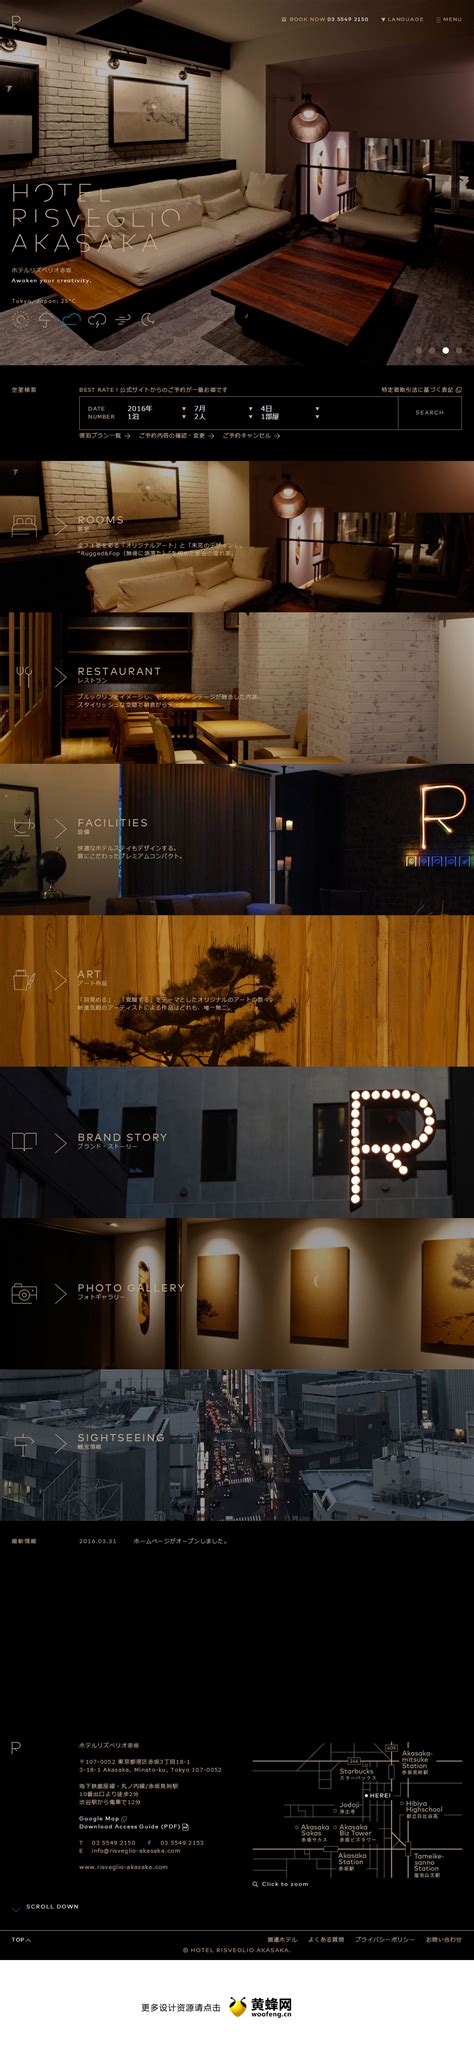 Risveglio Akasaka酒店网站 - - 大美工dameigong.cn